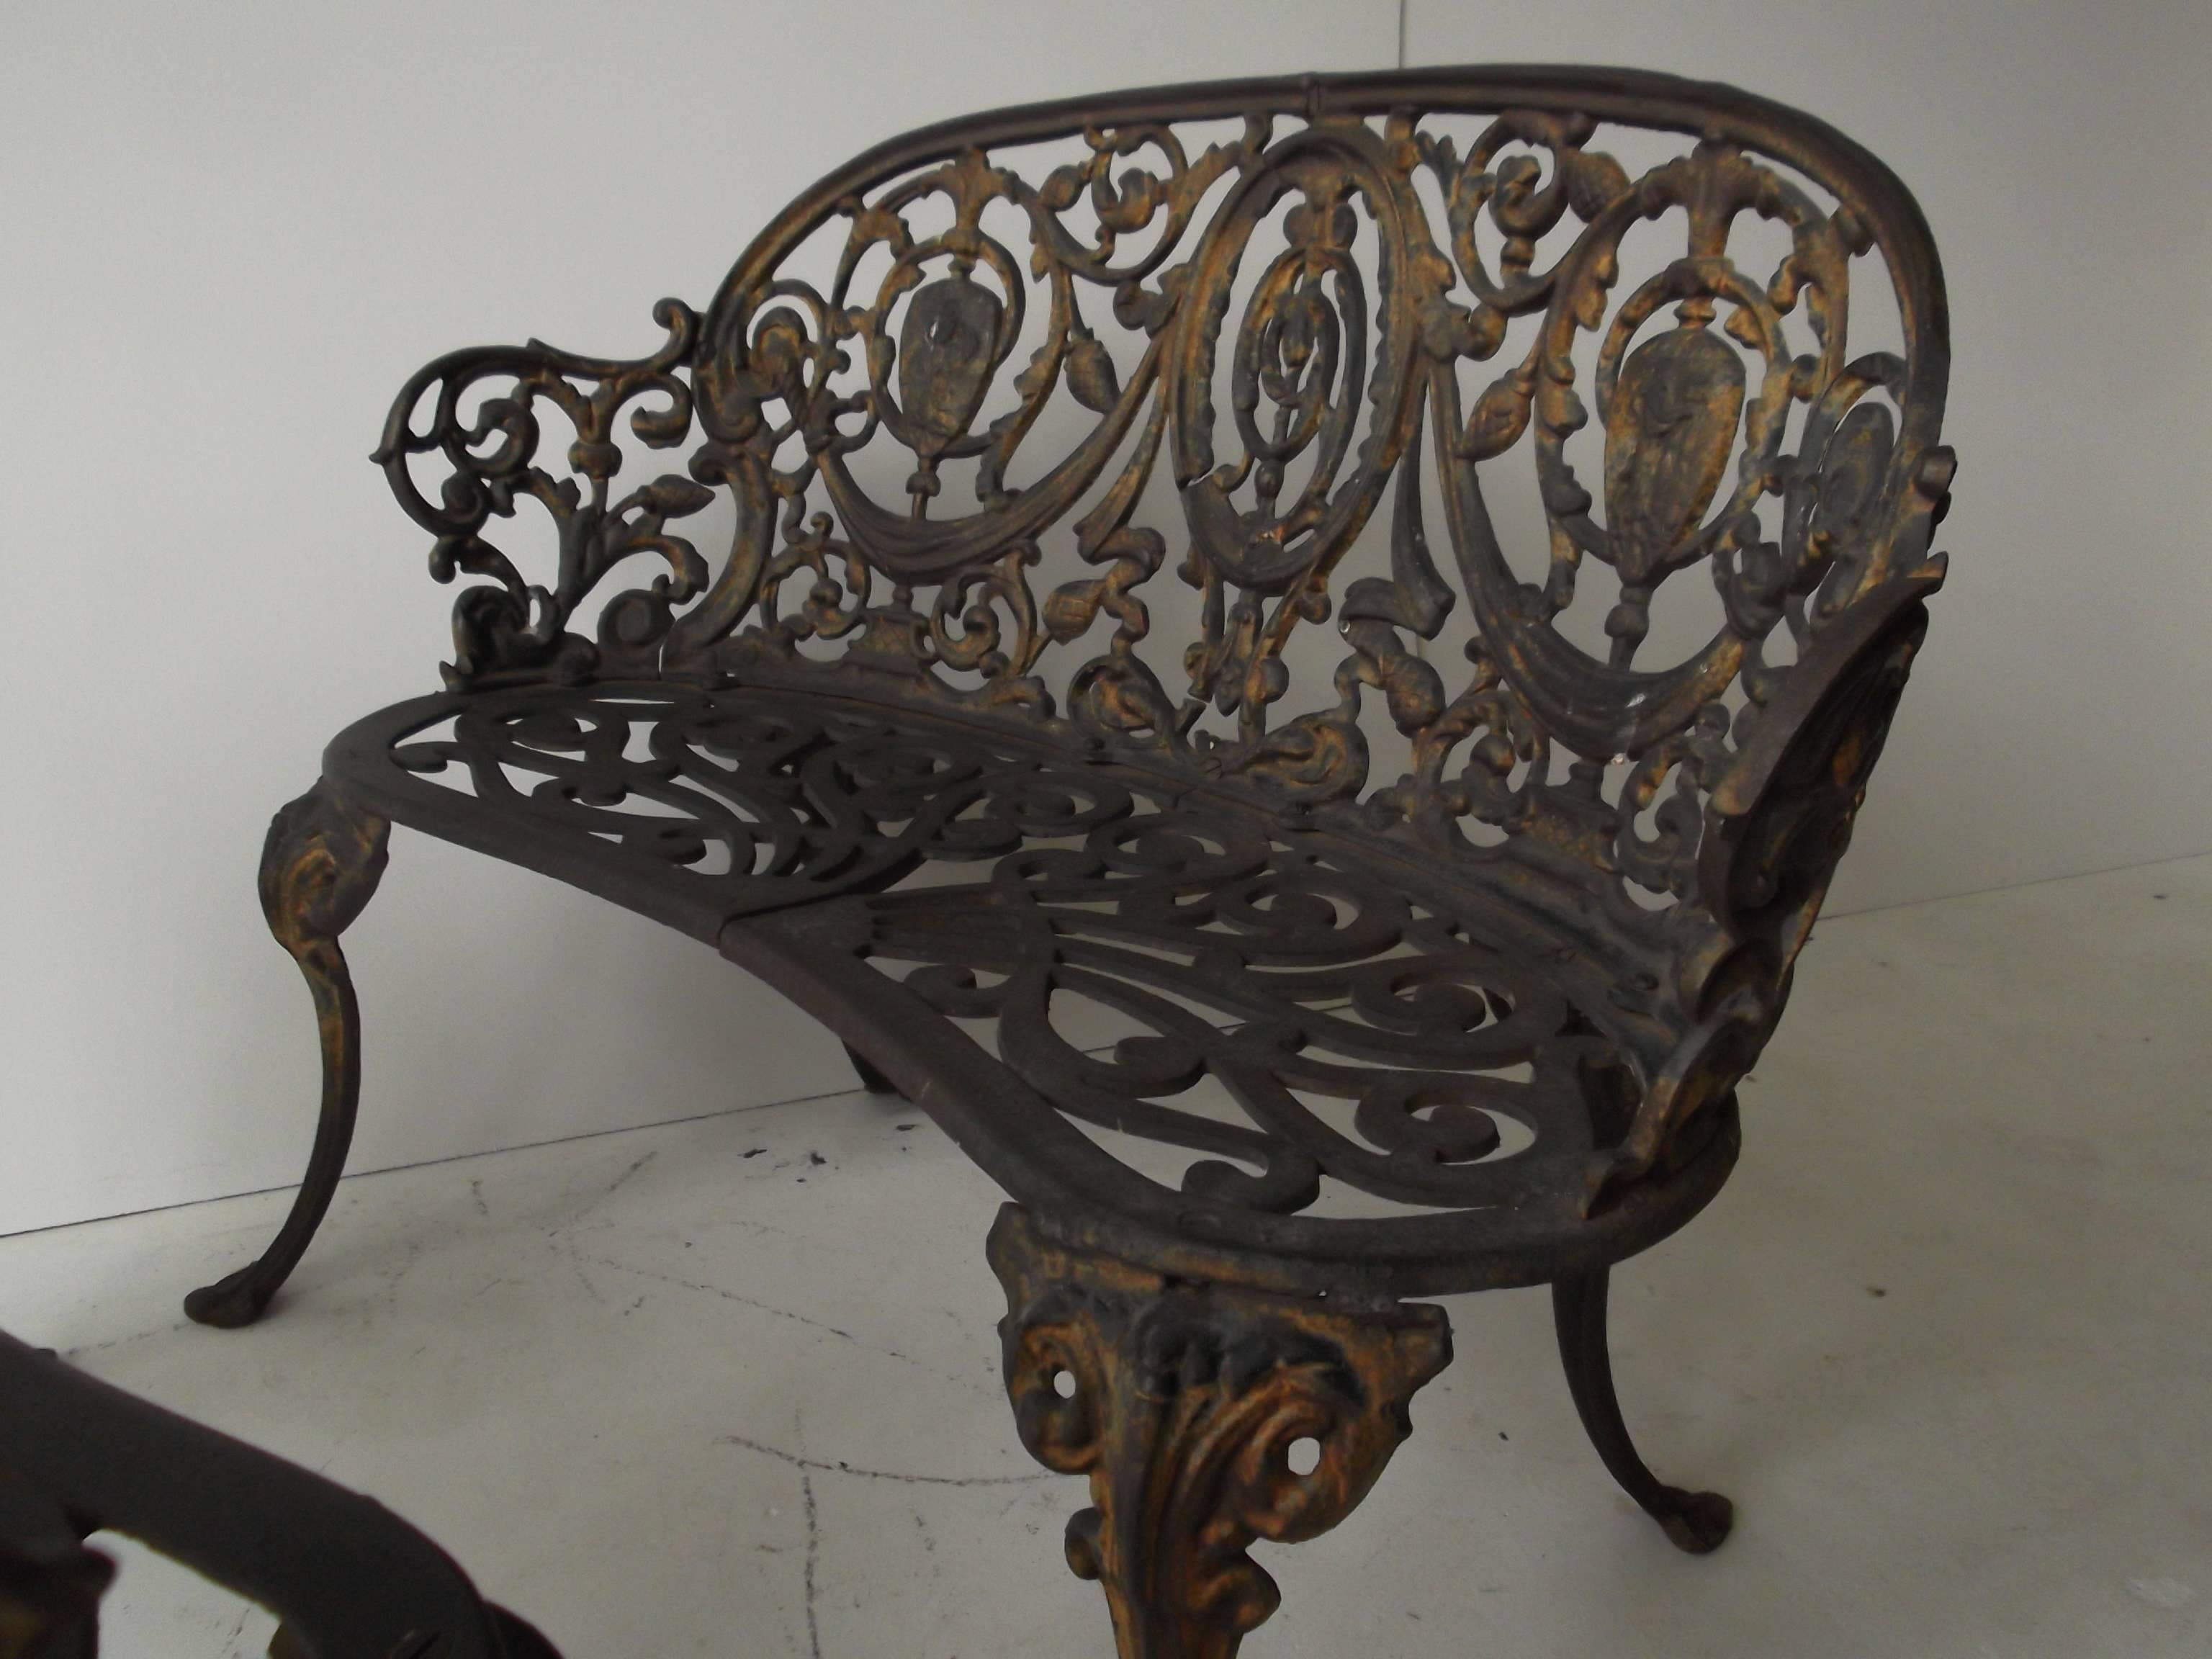 Pair of Antique Ornate Cast Iron Diminutive Garden Bench Seats 2